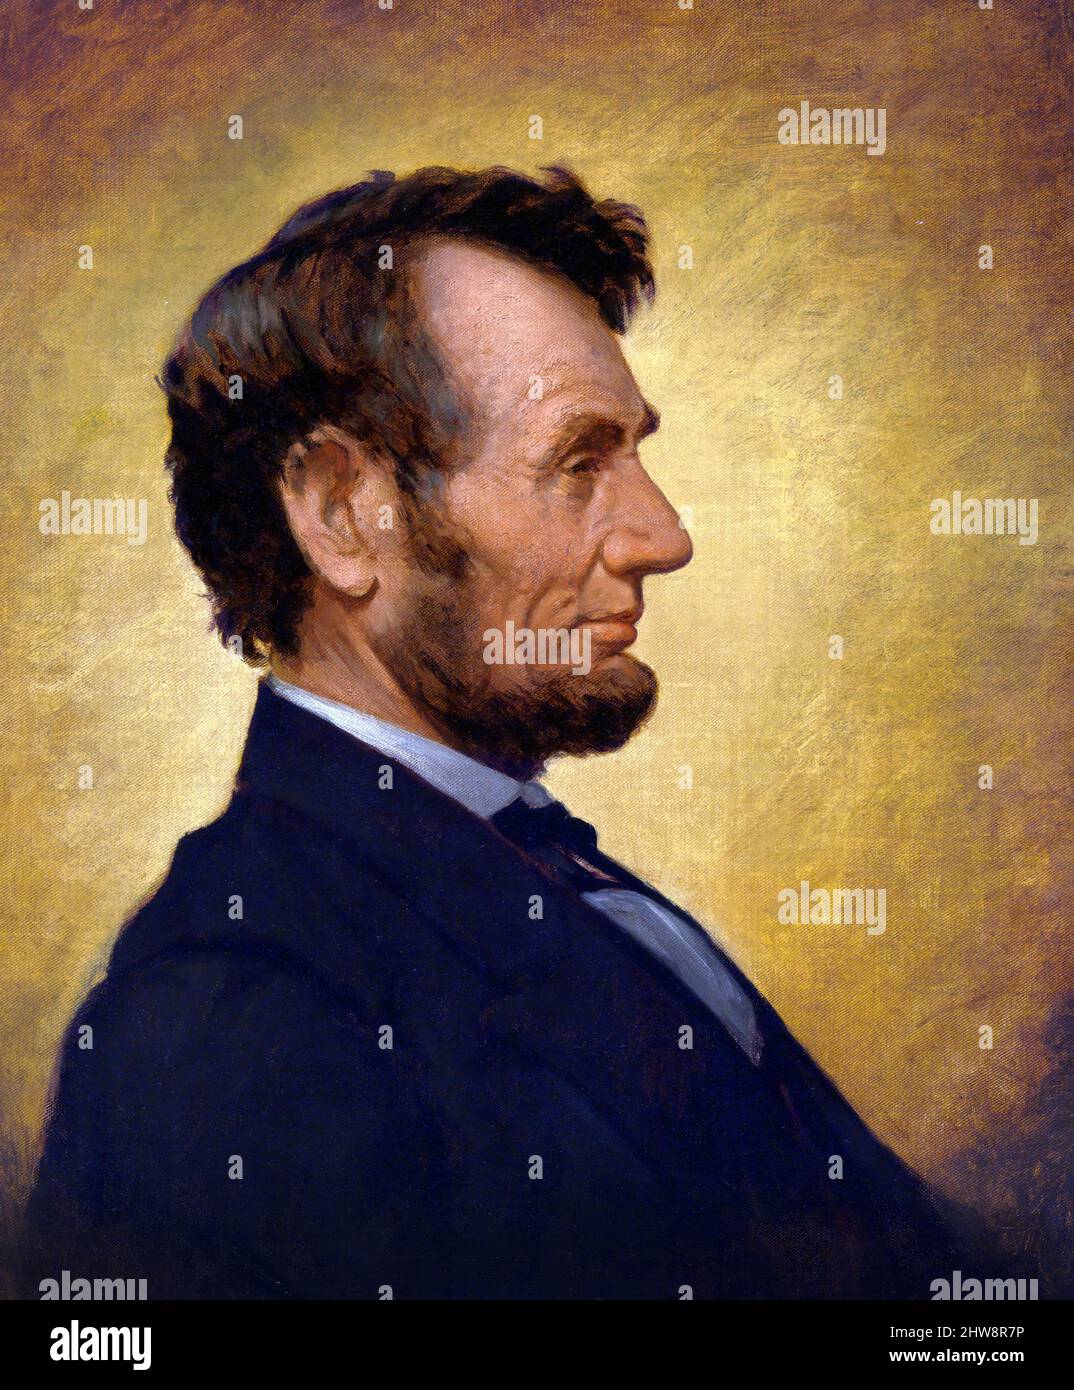 The Penny image of Abraham Lincoln (1809-1865) par William Willard, huile sur toile, 1864 Banque D'Images